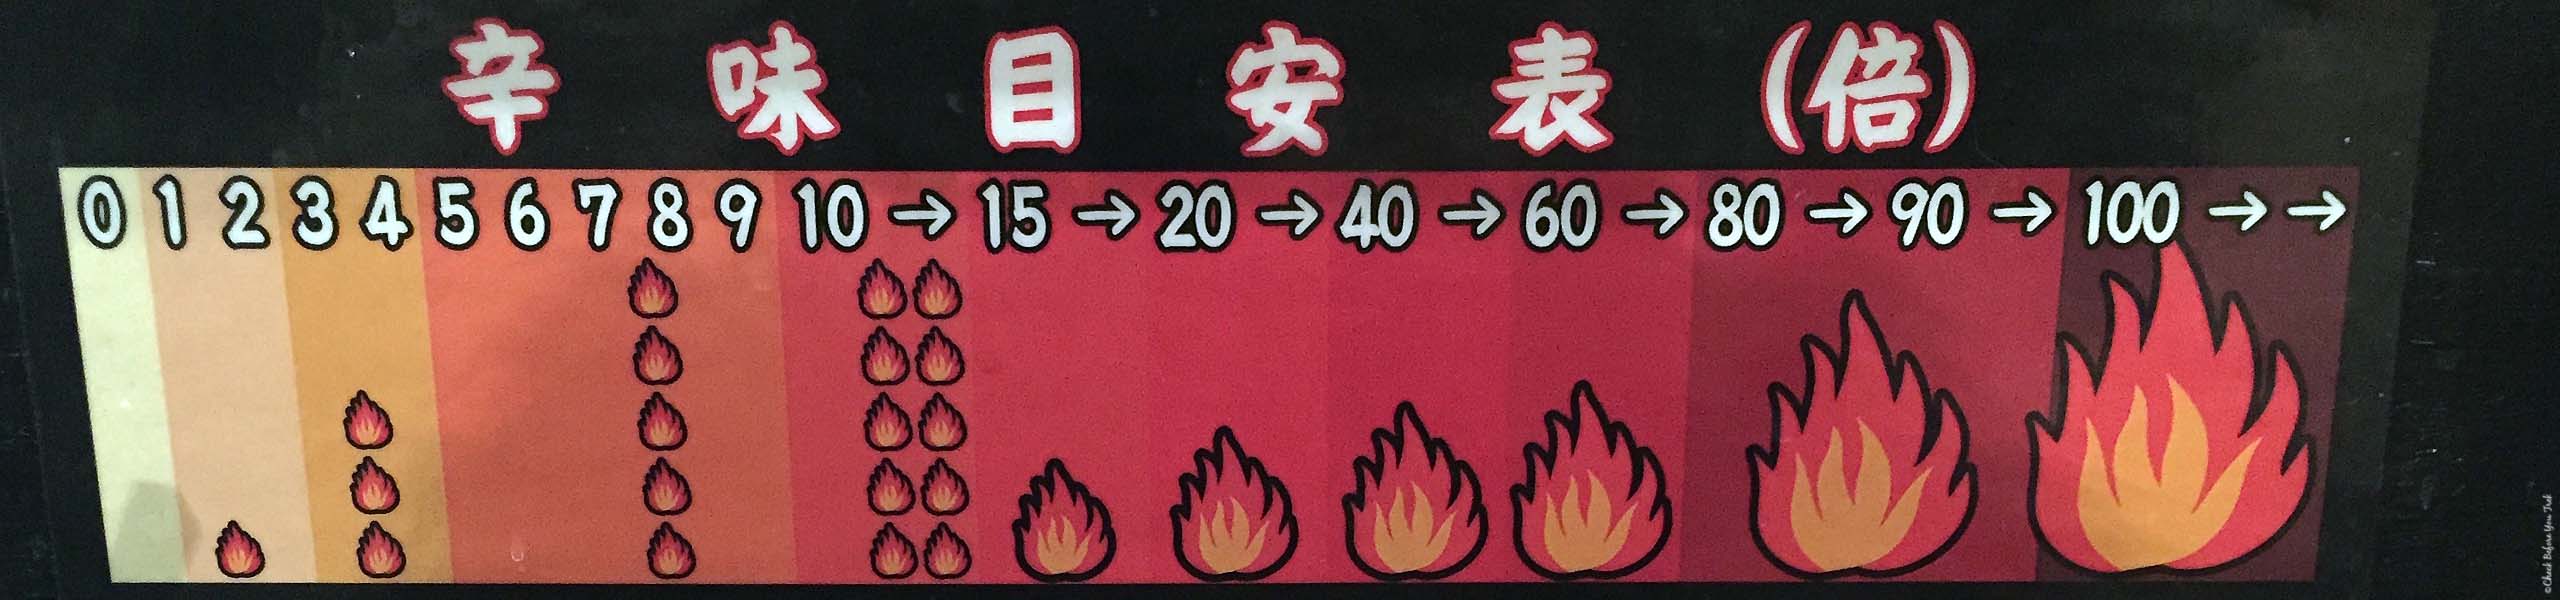 Featured Photo Hiroshima Eats - Spice Level Chart for Tsukemen Noodles at Bakudanya - Hiroshima, Japan (Photograph from the website: Check Before You Trek)